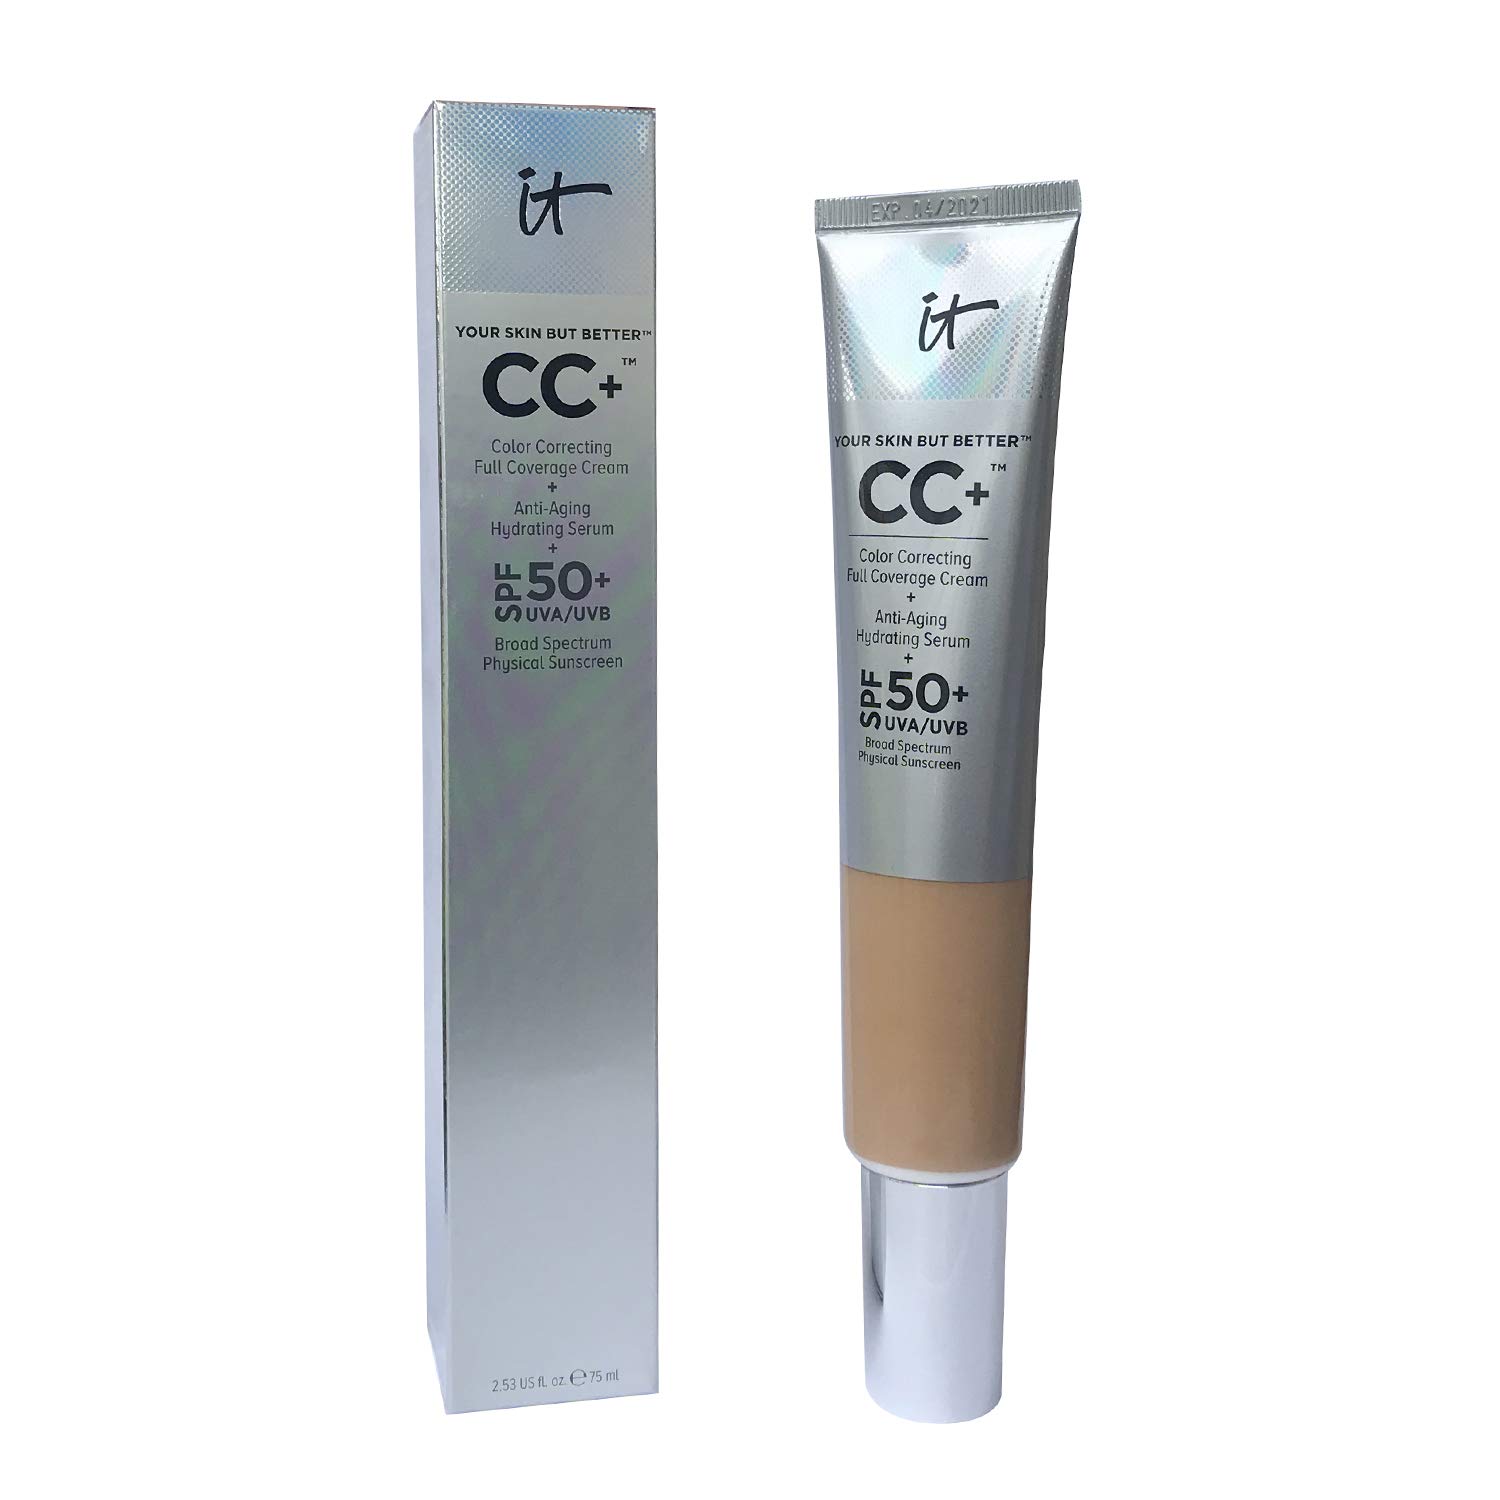  It Cosmetics Your Skin but Better Cc+ Cream SPF 50+ Supersize 2.53 Fl Oz Neutral Tan